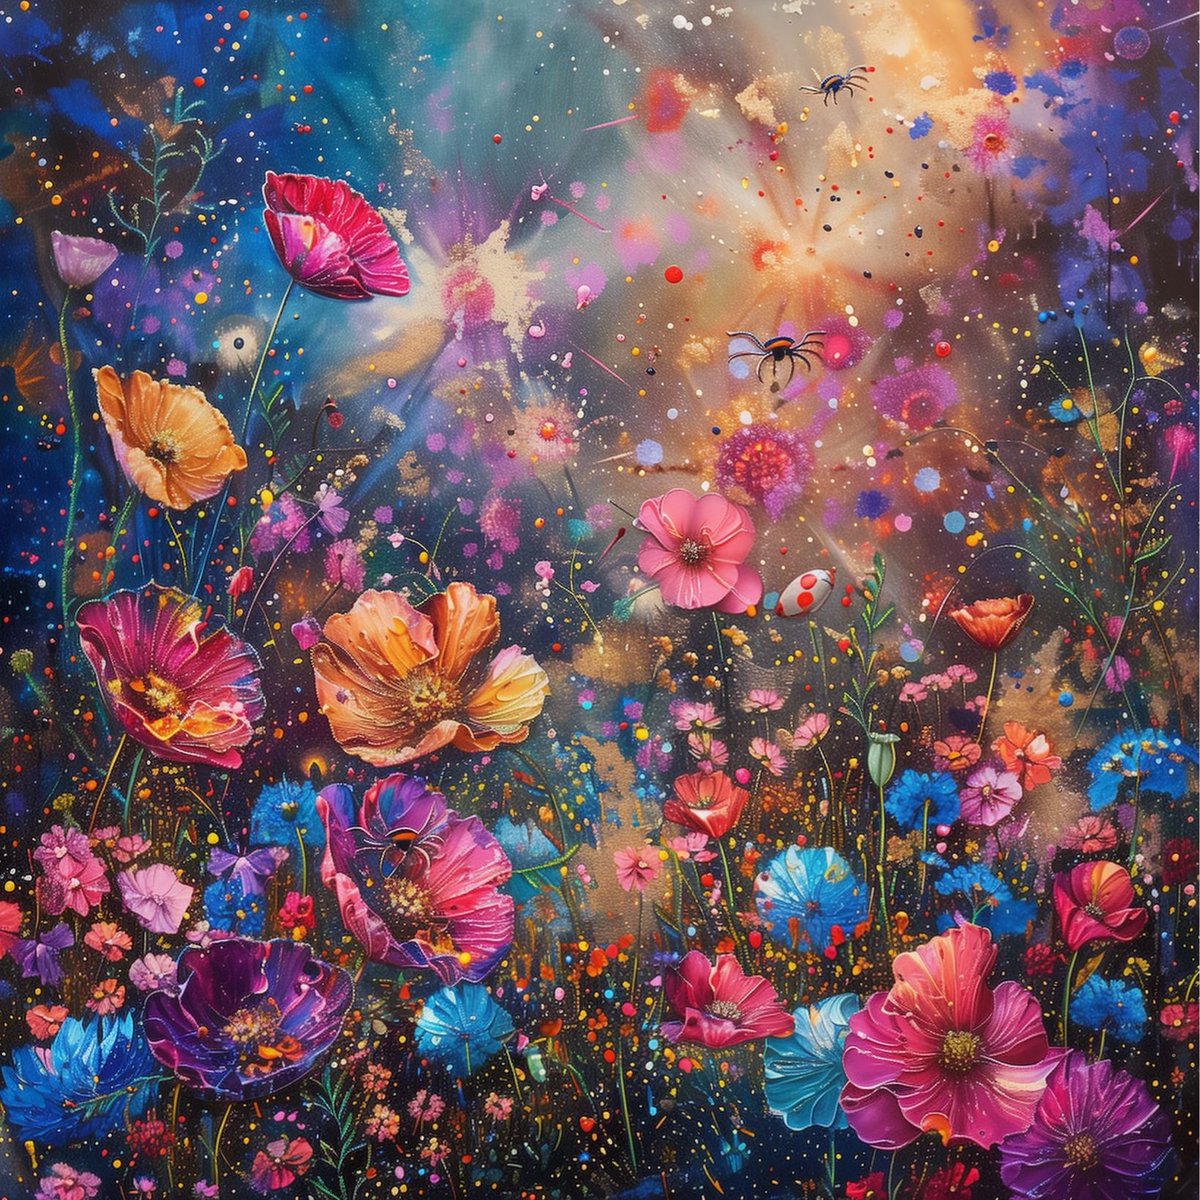 The earth laughs in flowers. ~ Ralph Waldo Emerson #writing #Art #flowers #LeonardoDiAetherhart buff.ly/4dsUIHc